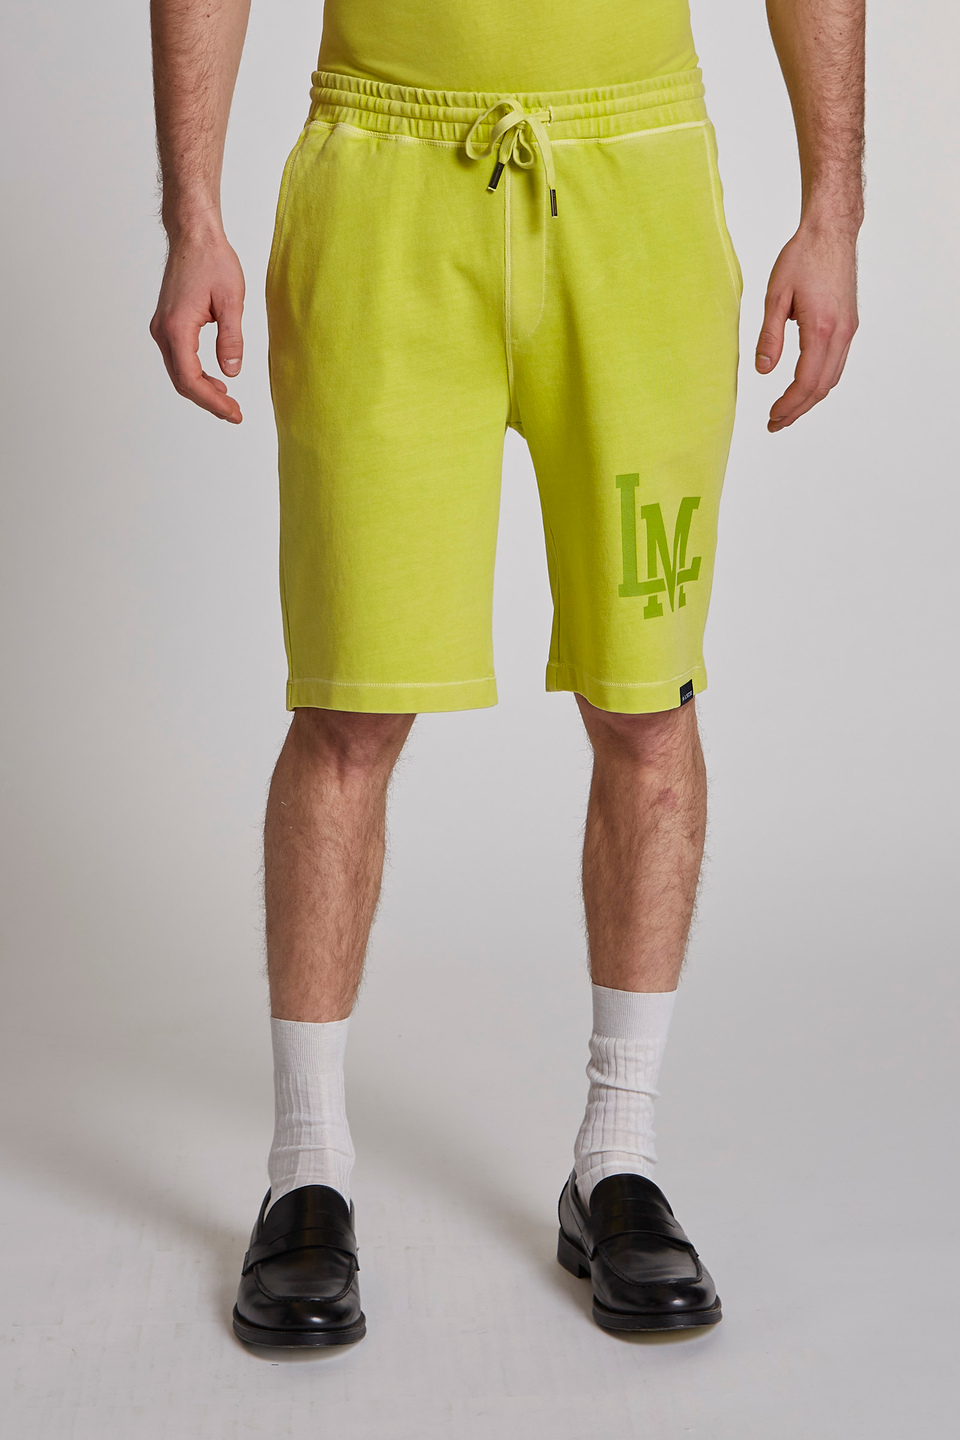 Men's comfort-fit cotton Bermuda shorts | La Martina - Official Online Shop